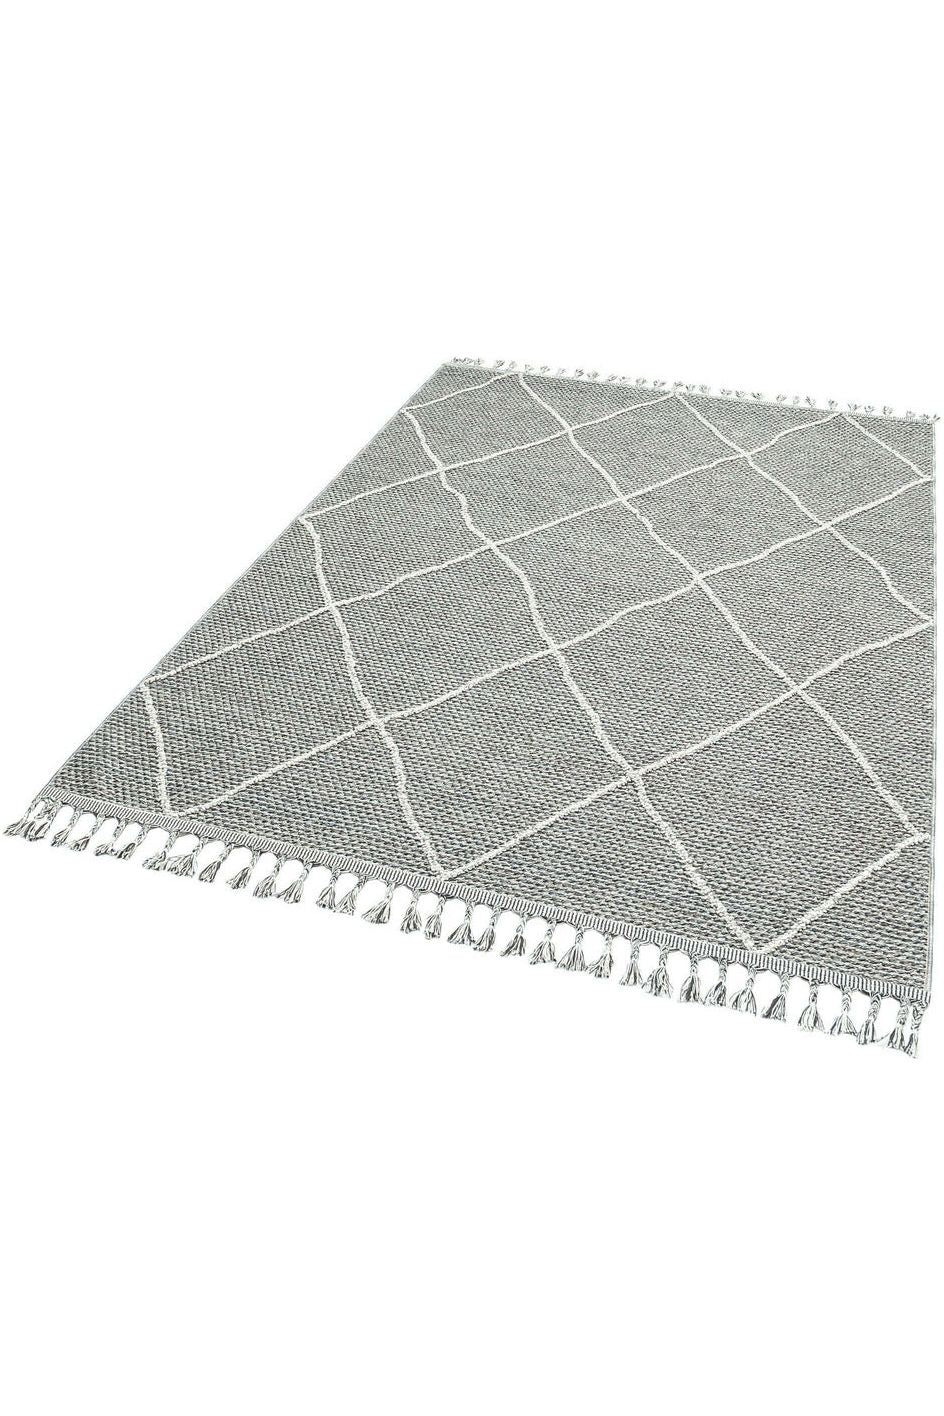 #Turkish_Carpets_Rugs# #Modern_Carpets# #Abrash_Carpets#Sh 02 Grey